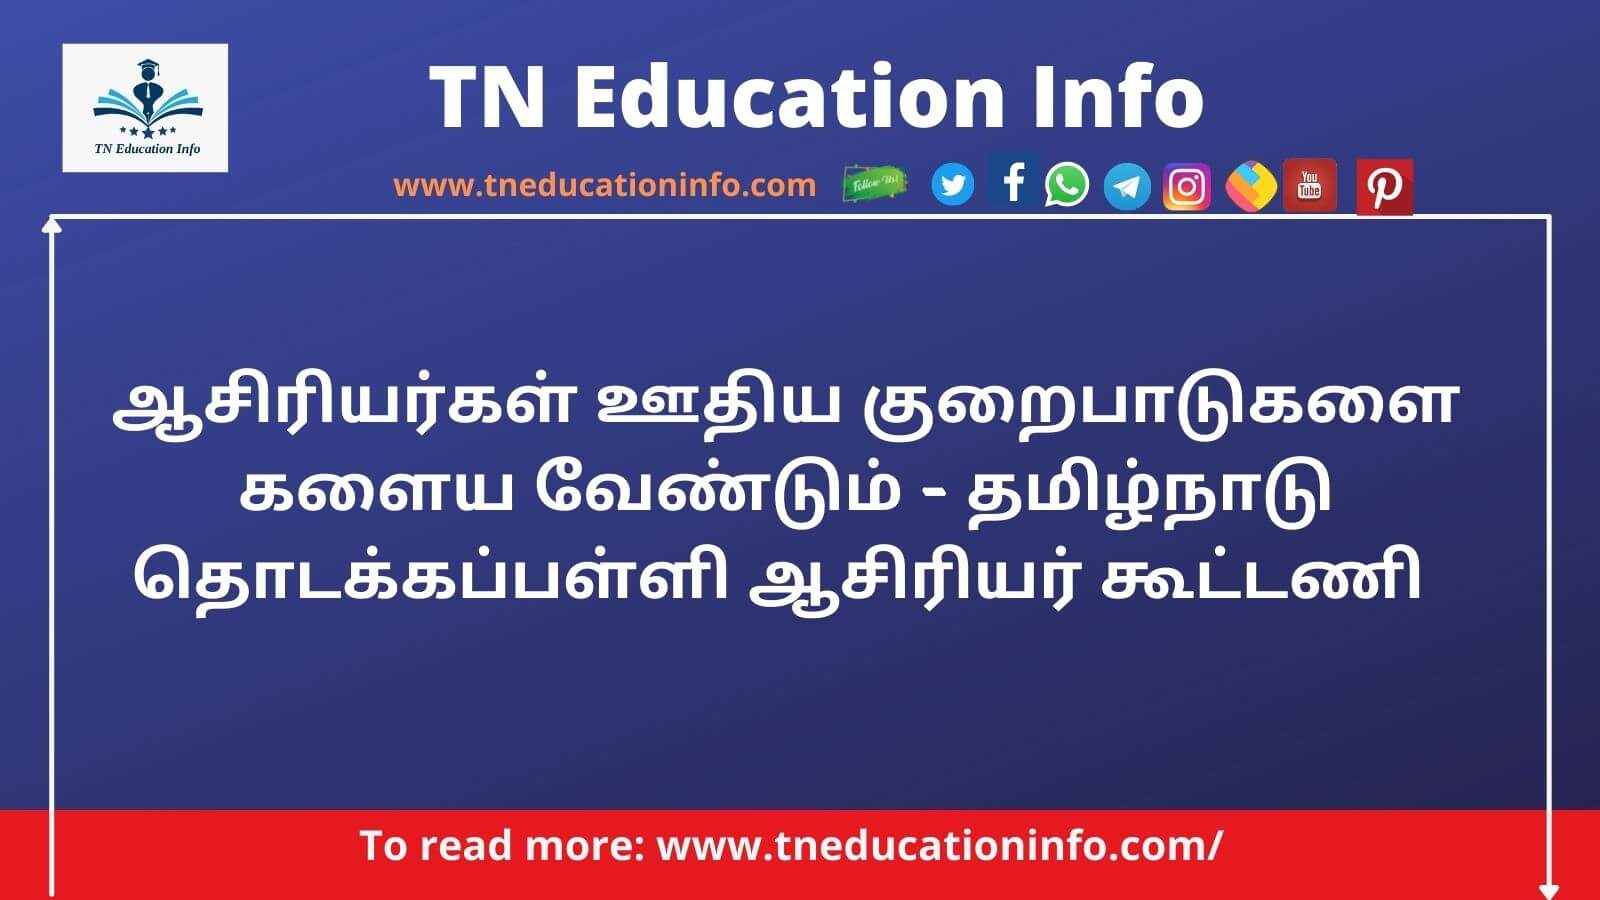 Tamil Nadu Elementary School Teacher Federation Demand